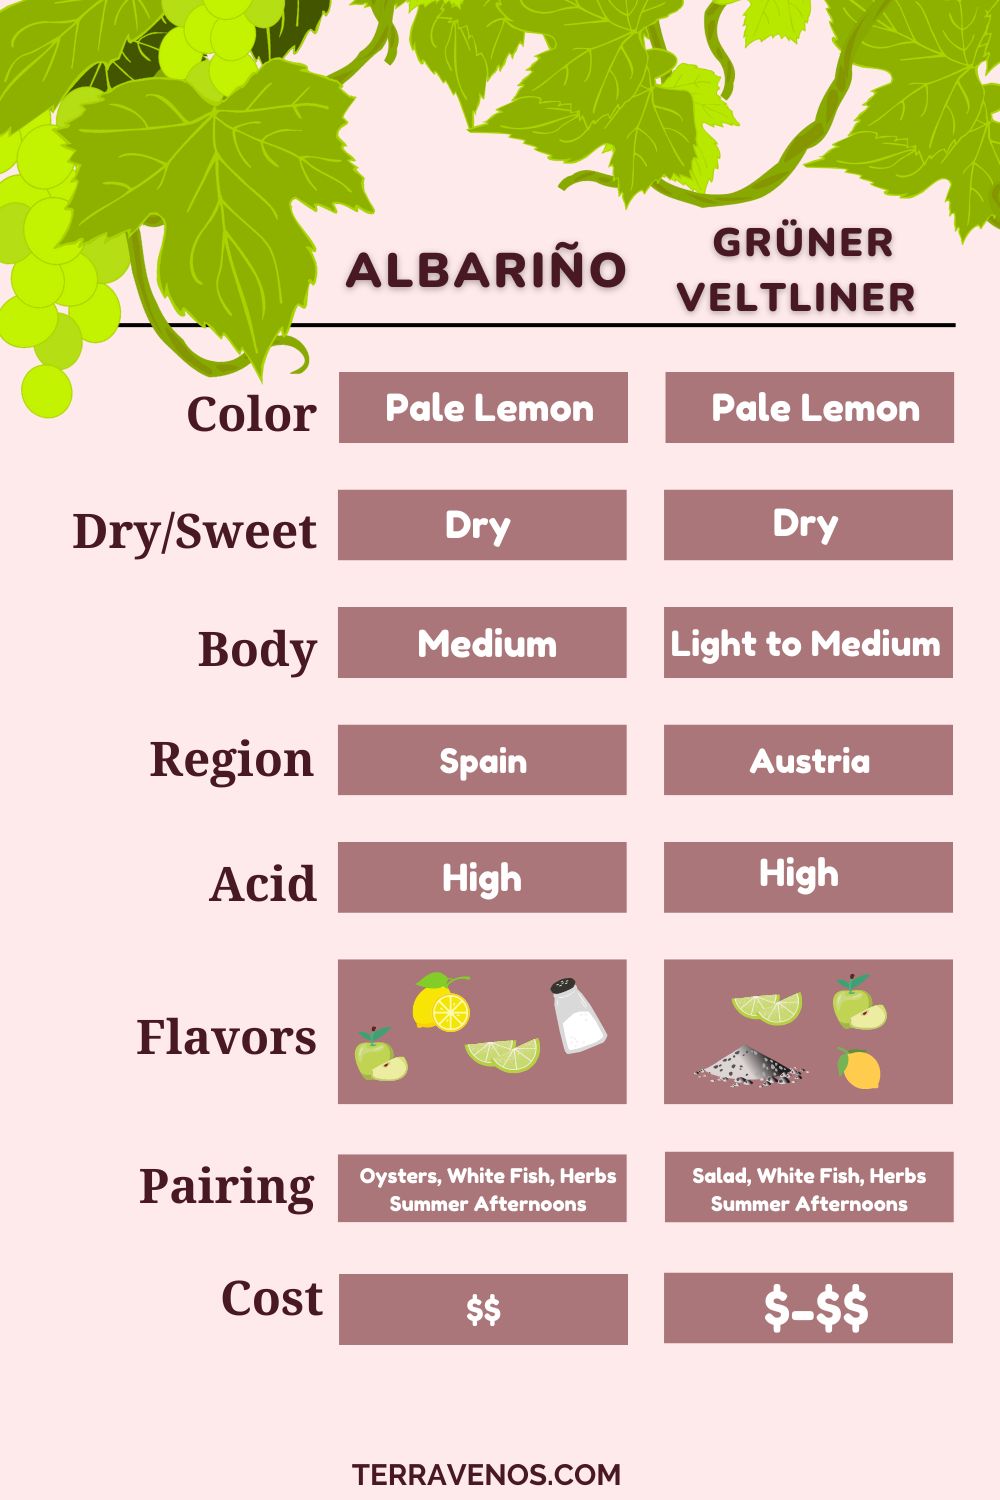 albarino-vs-gruner-veltliner-wine-comparison-infographic